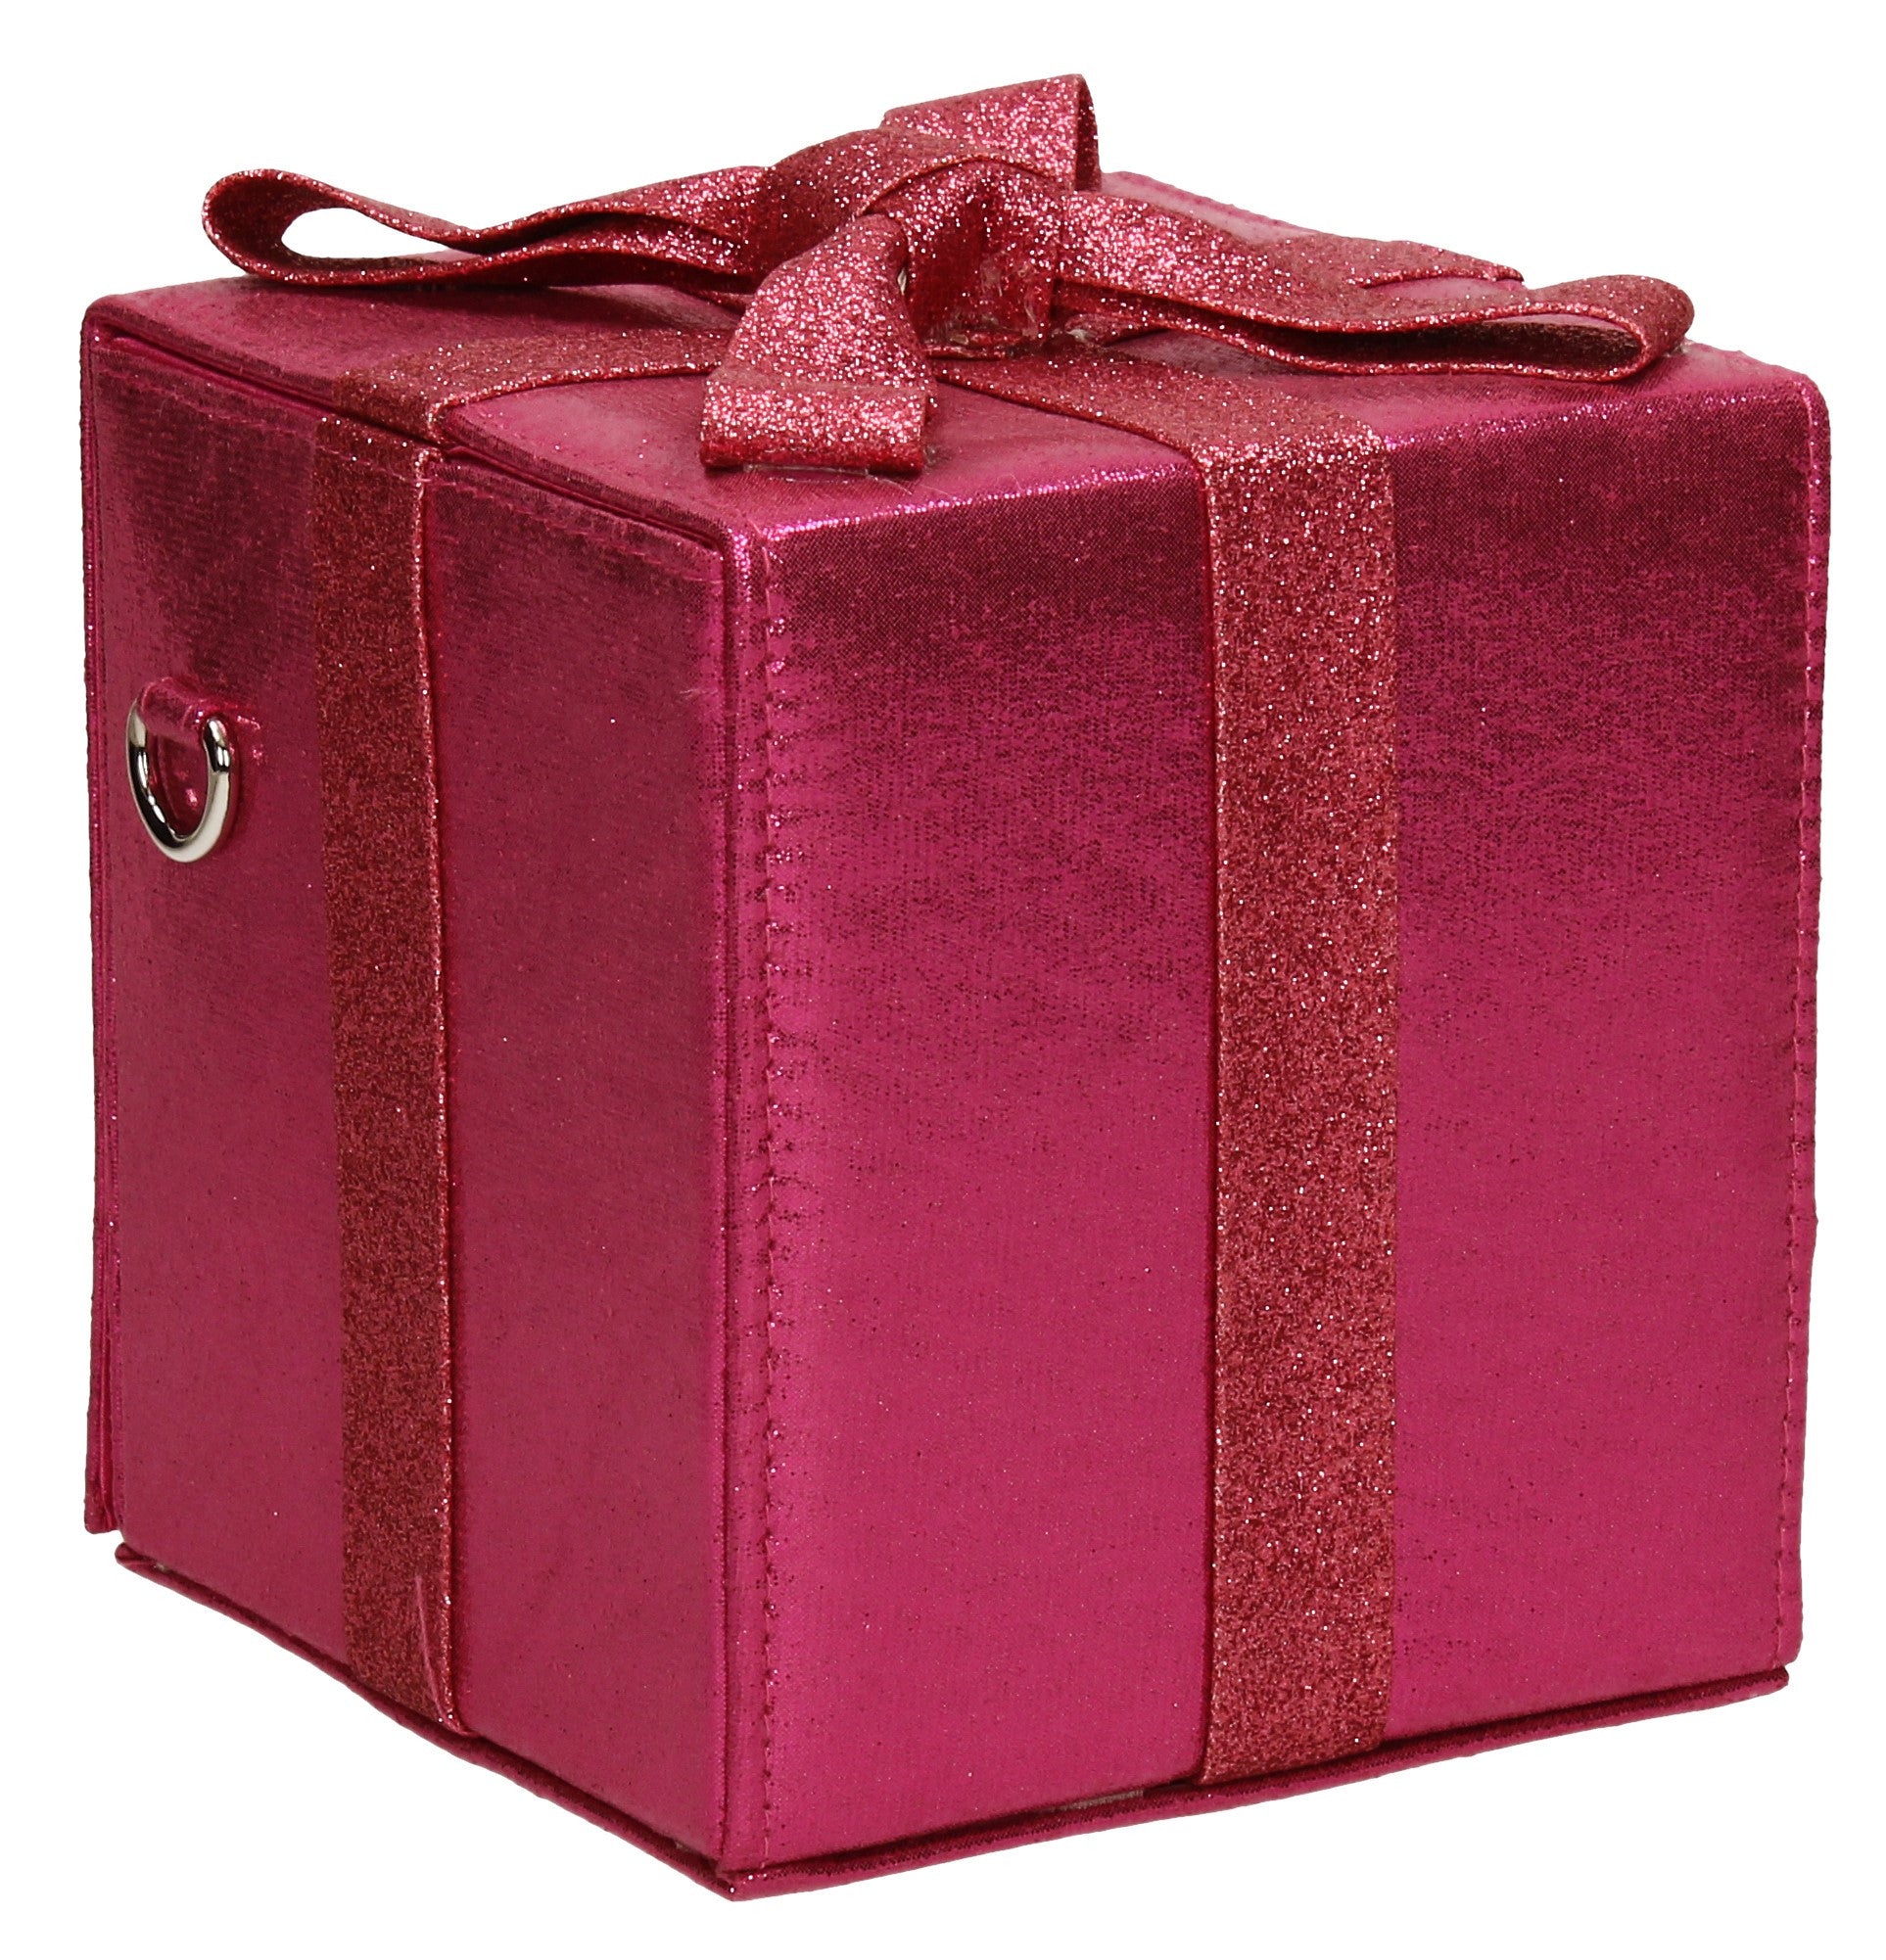 SWANKYSWANS Sara Clutch Bag Rose Cute Cheap Clutch Bag For Weddings School and Work